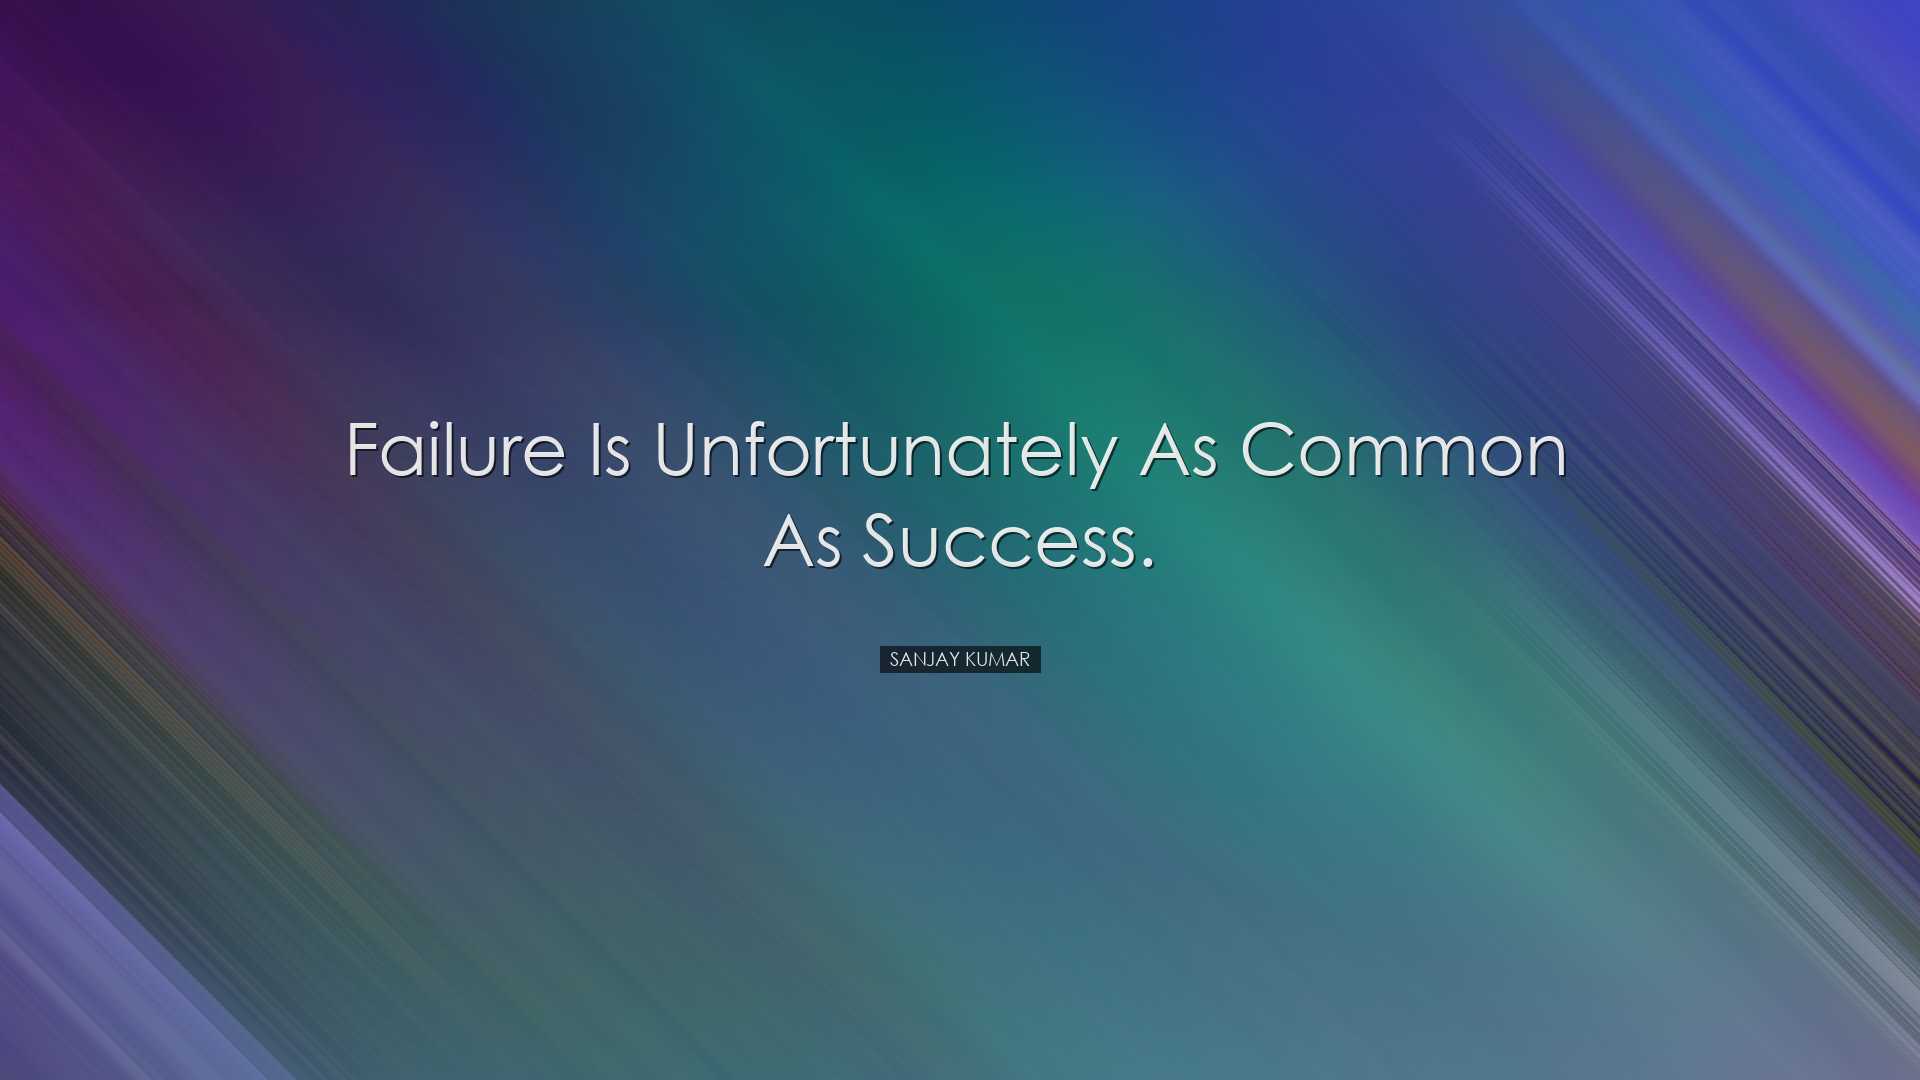 Failure is unfortunately as common as success. - Sanjay Kumar